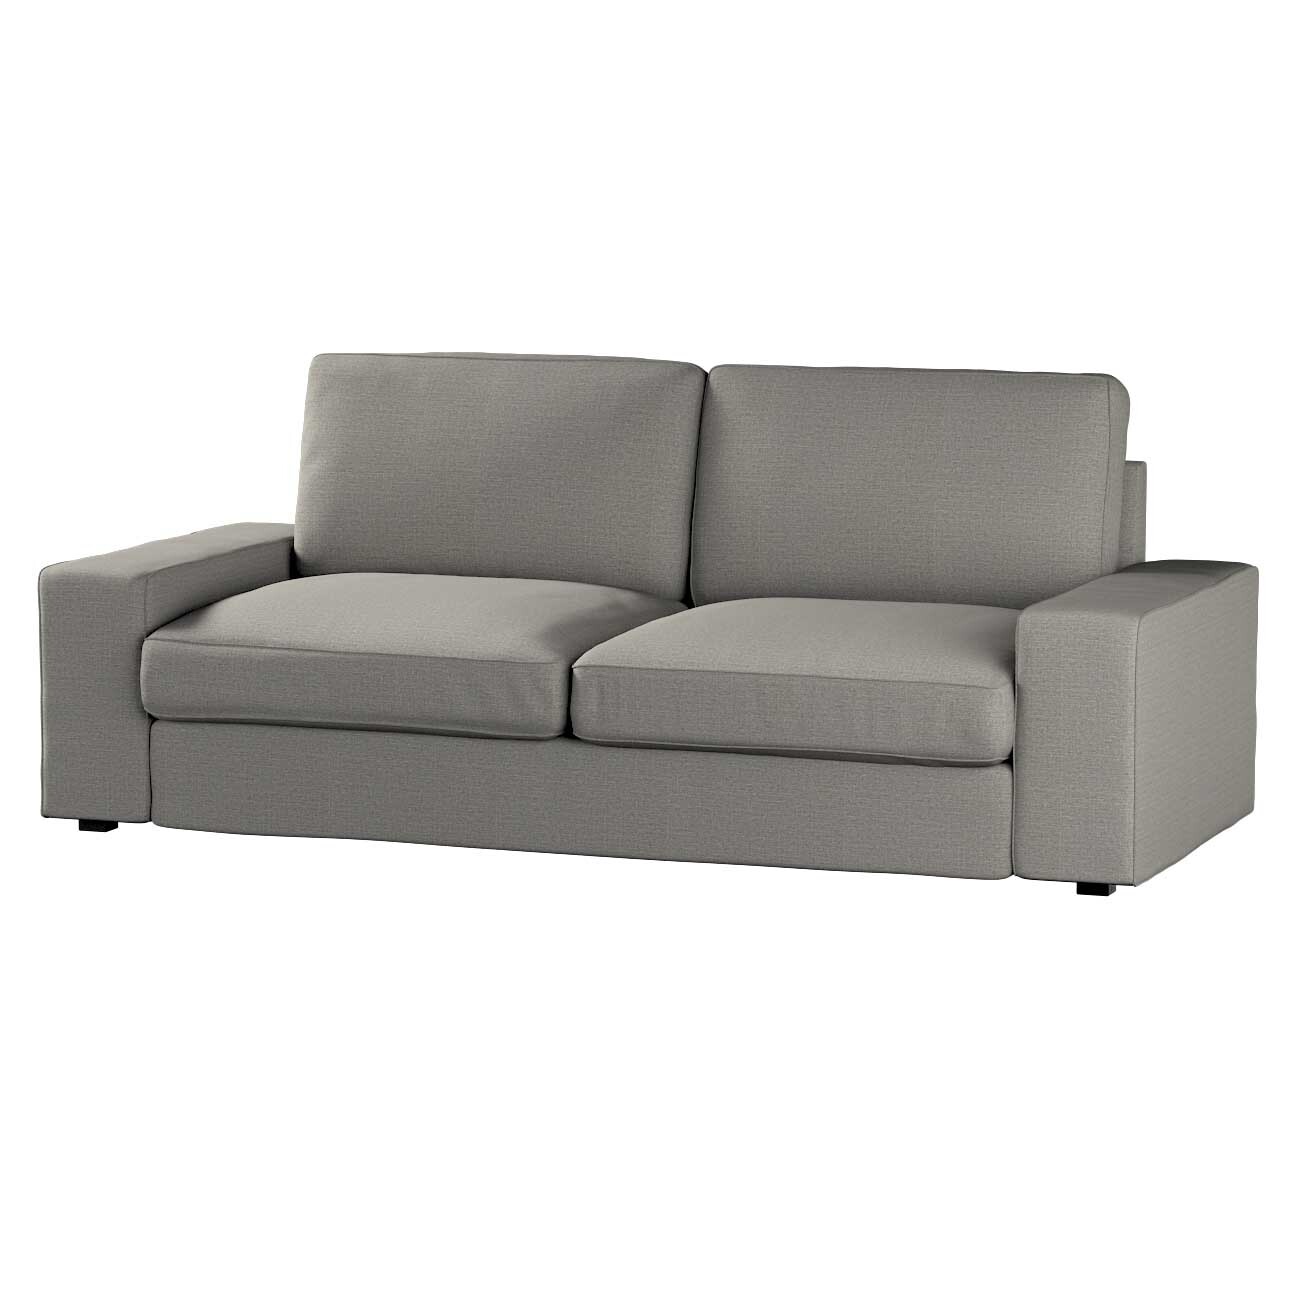 Bezug für Kivik 3-Sitzer Sofa, grau, Bezug für Sofa Kivik 3-Sitzer, Living günstig online kaufen